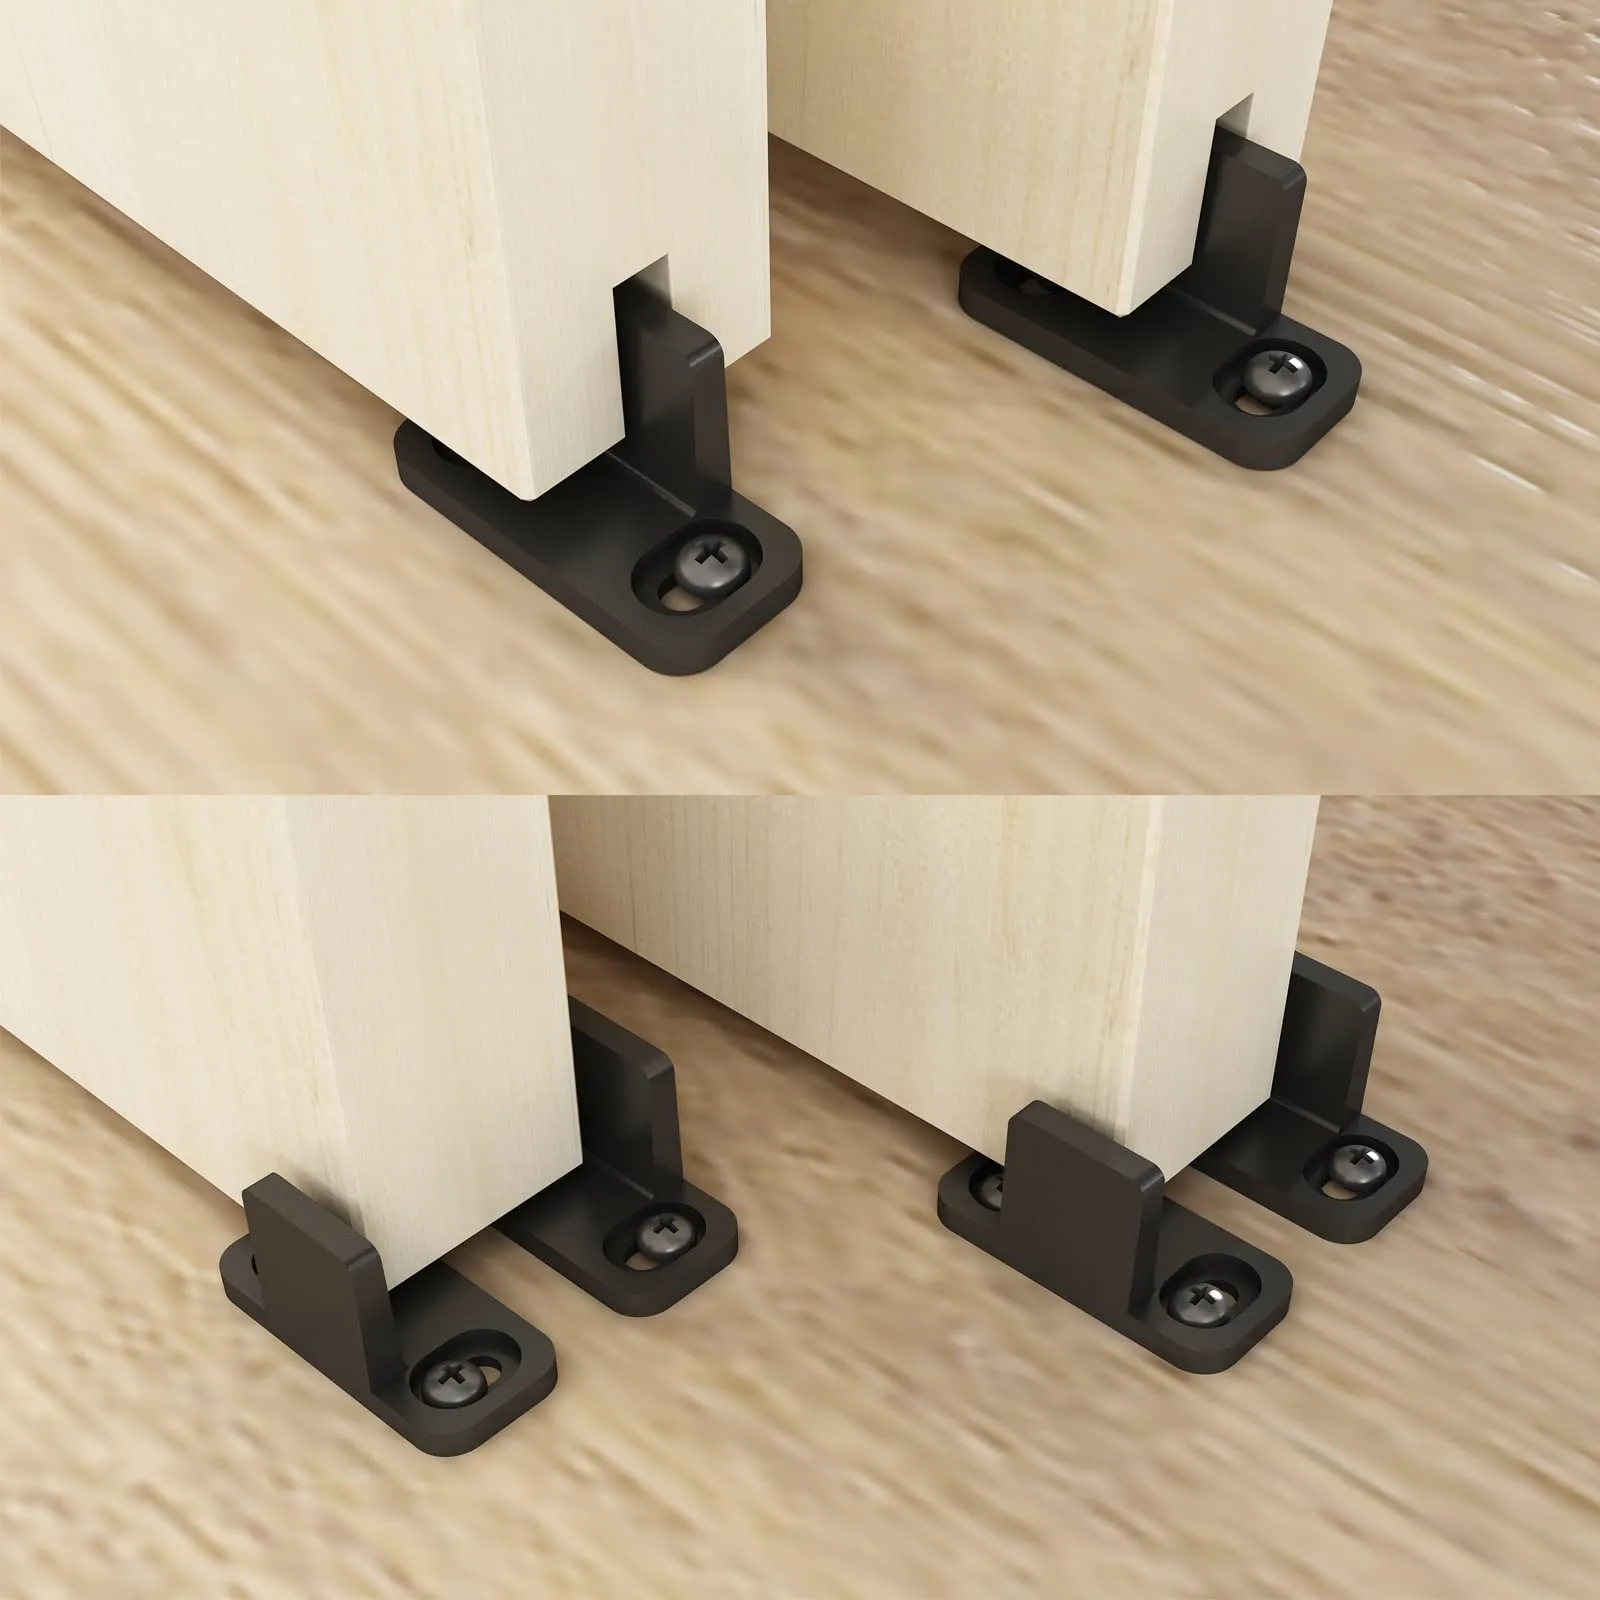 3ml adjustable u shape barn door floor guide wall mounted flexible flush bottom guide sturdy steel material black